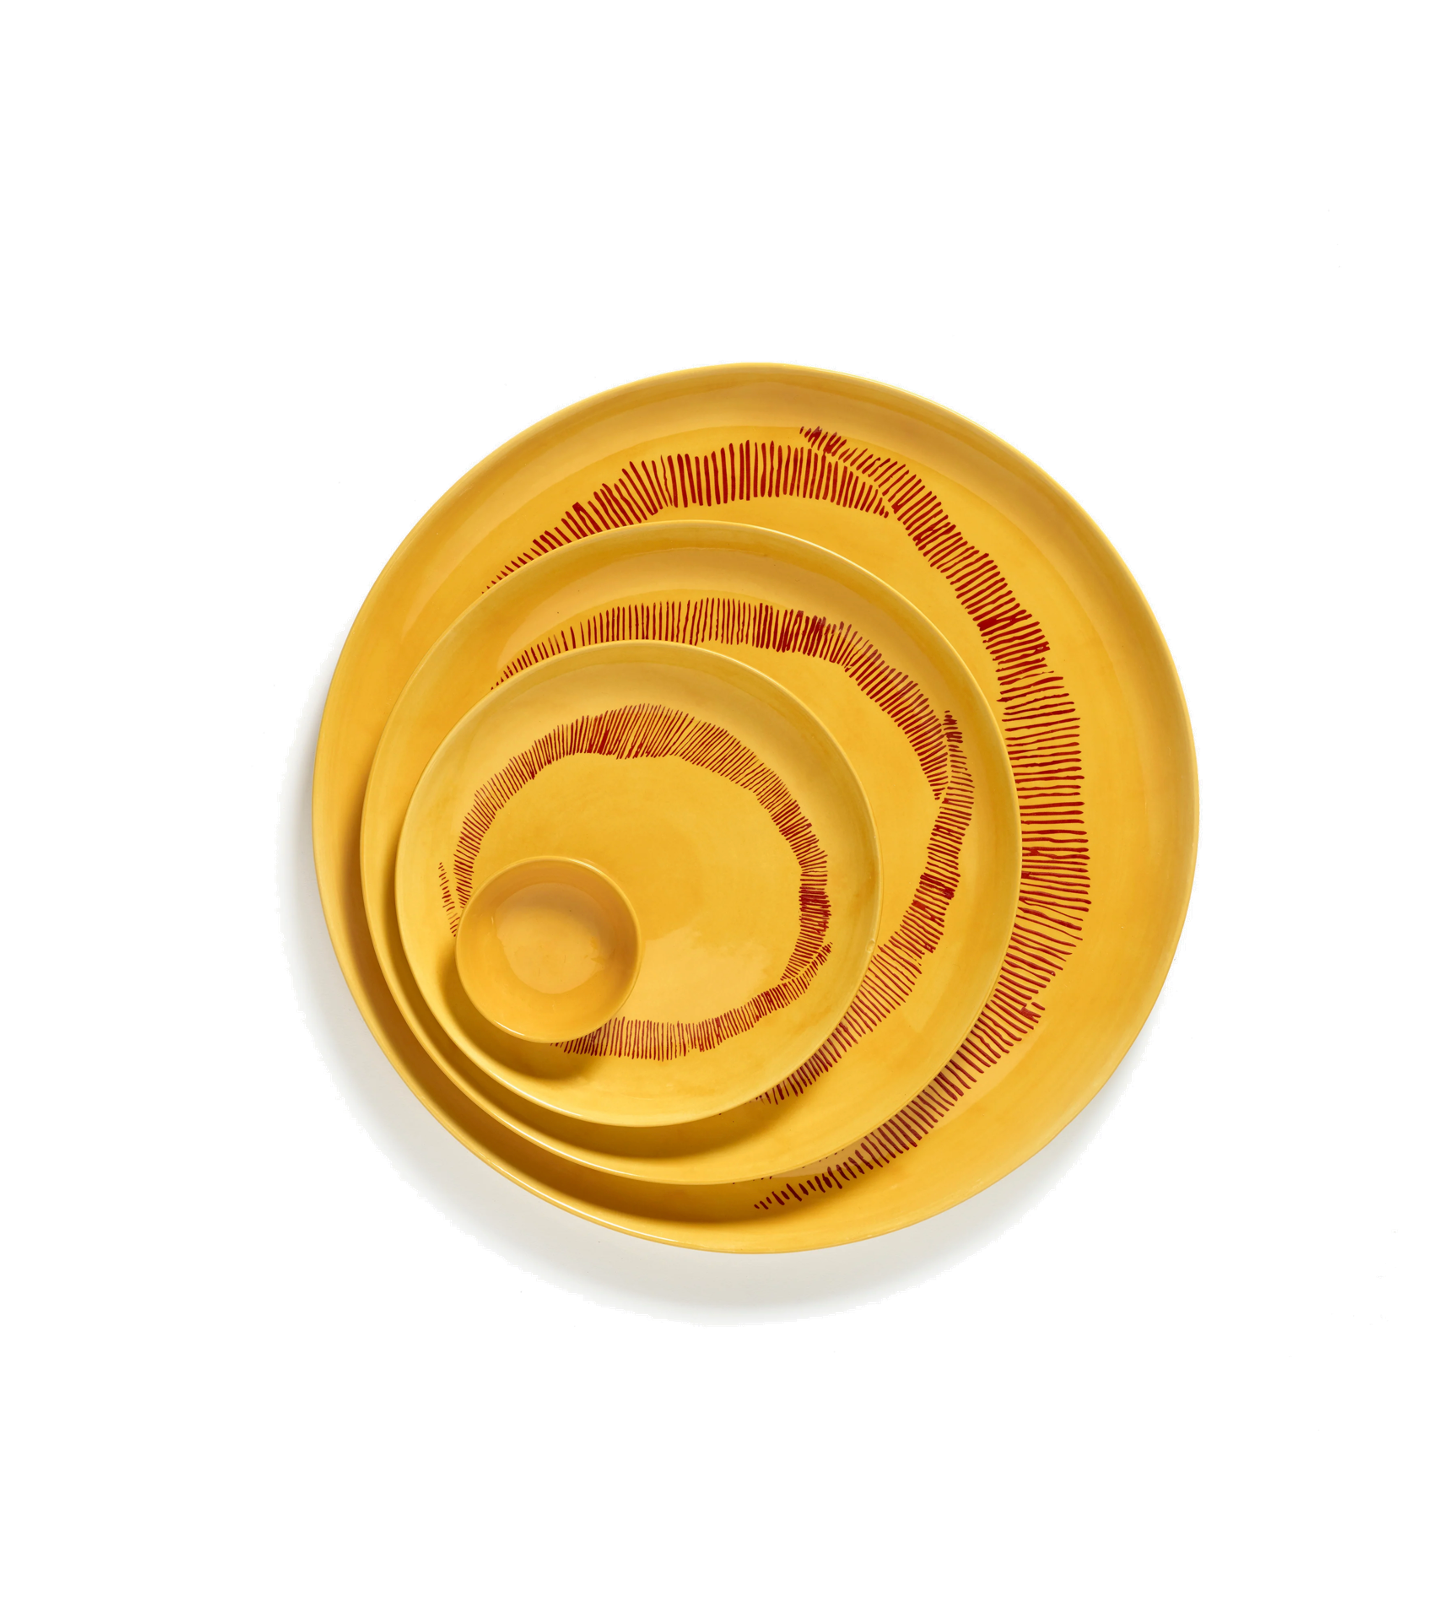 Feast Tableware Breakfast plate yellow/red stripes - SERAX